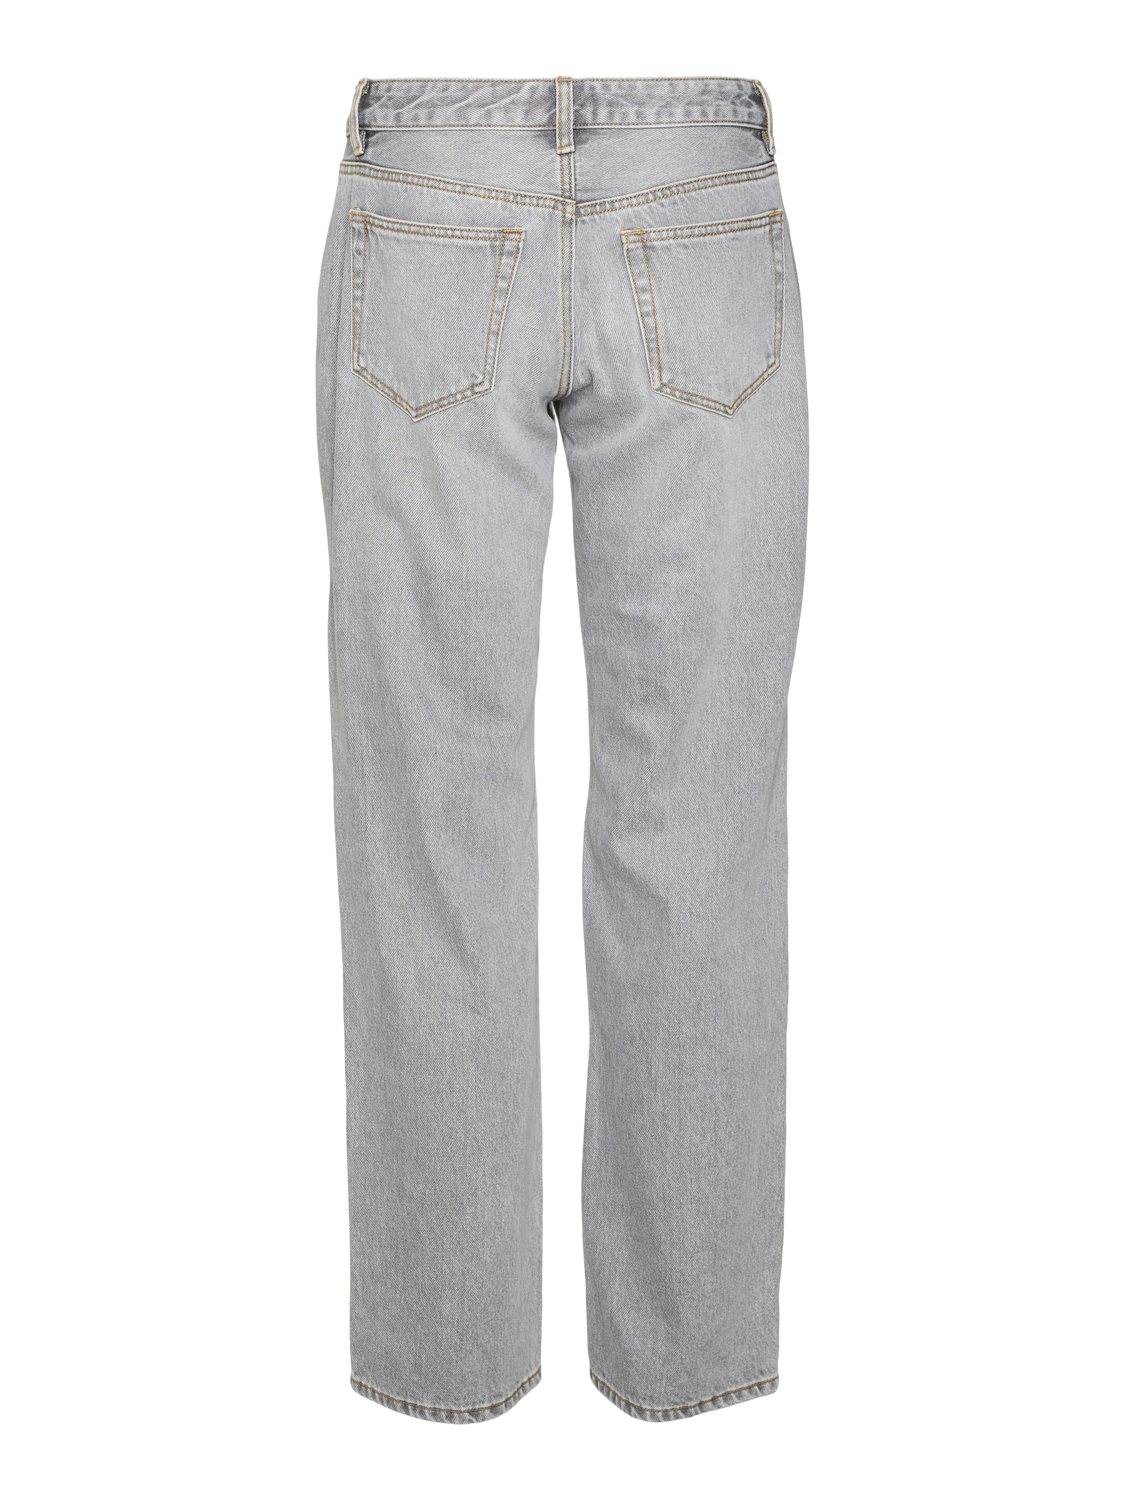 VMPAM Jeans - Medium Grey Denim